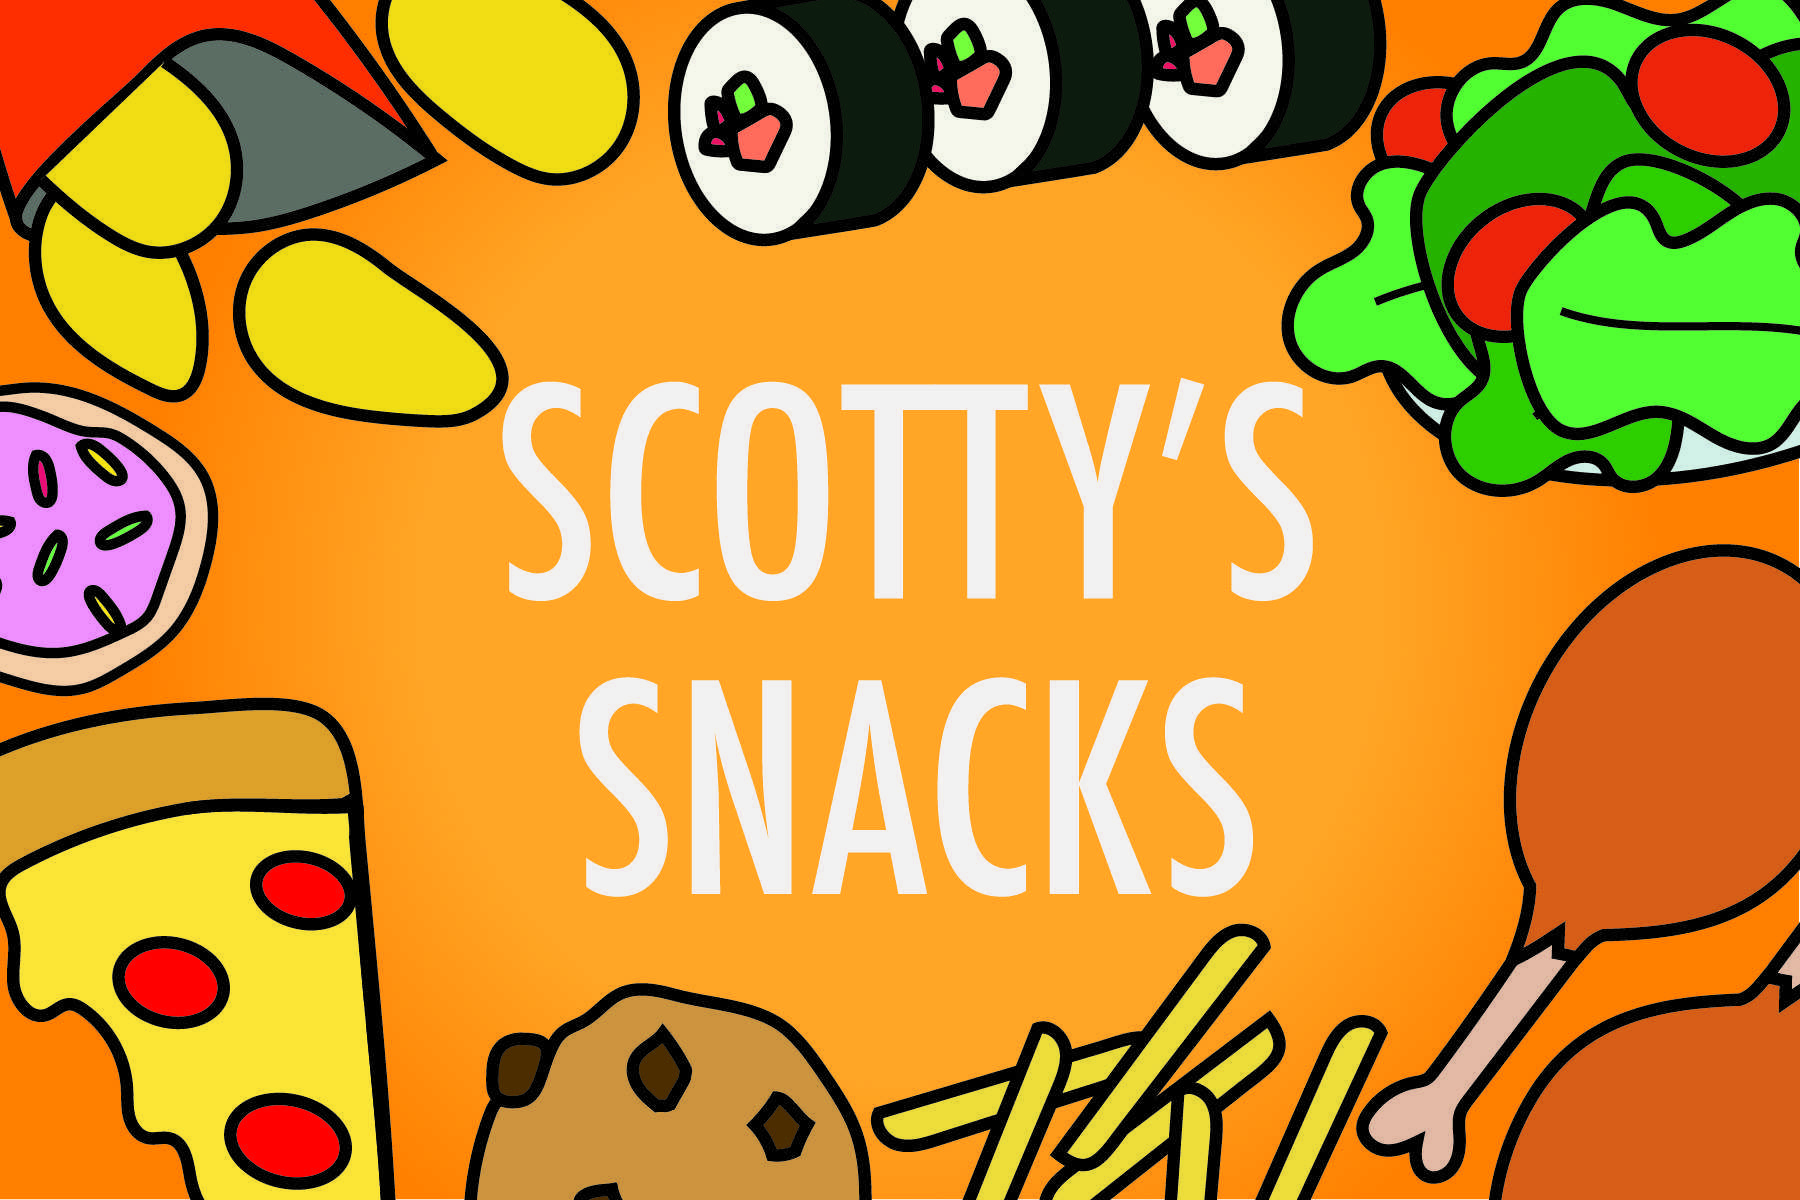 Scotty's snacks graphic